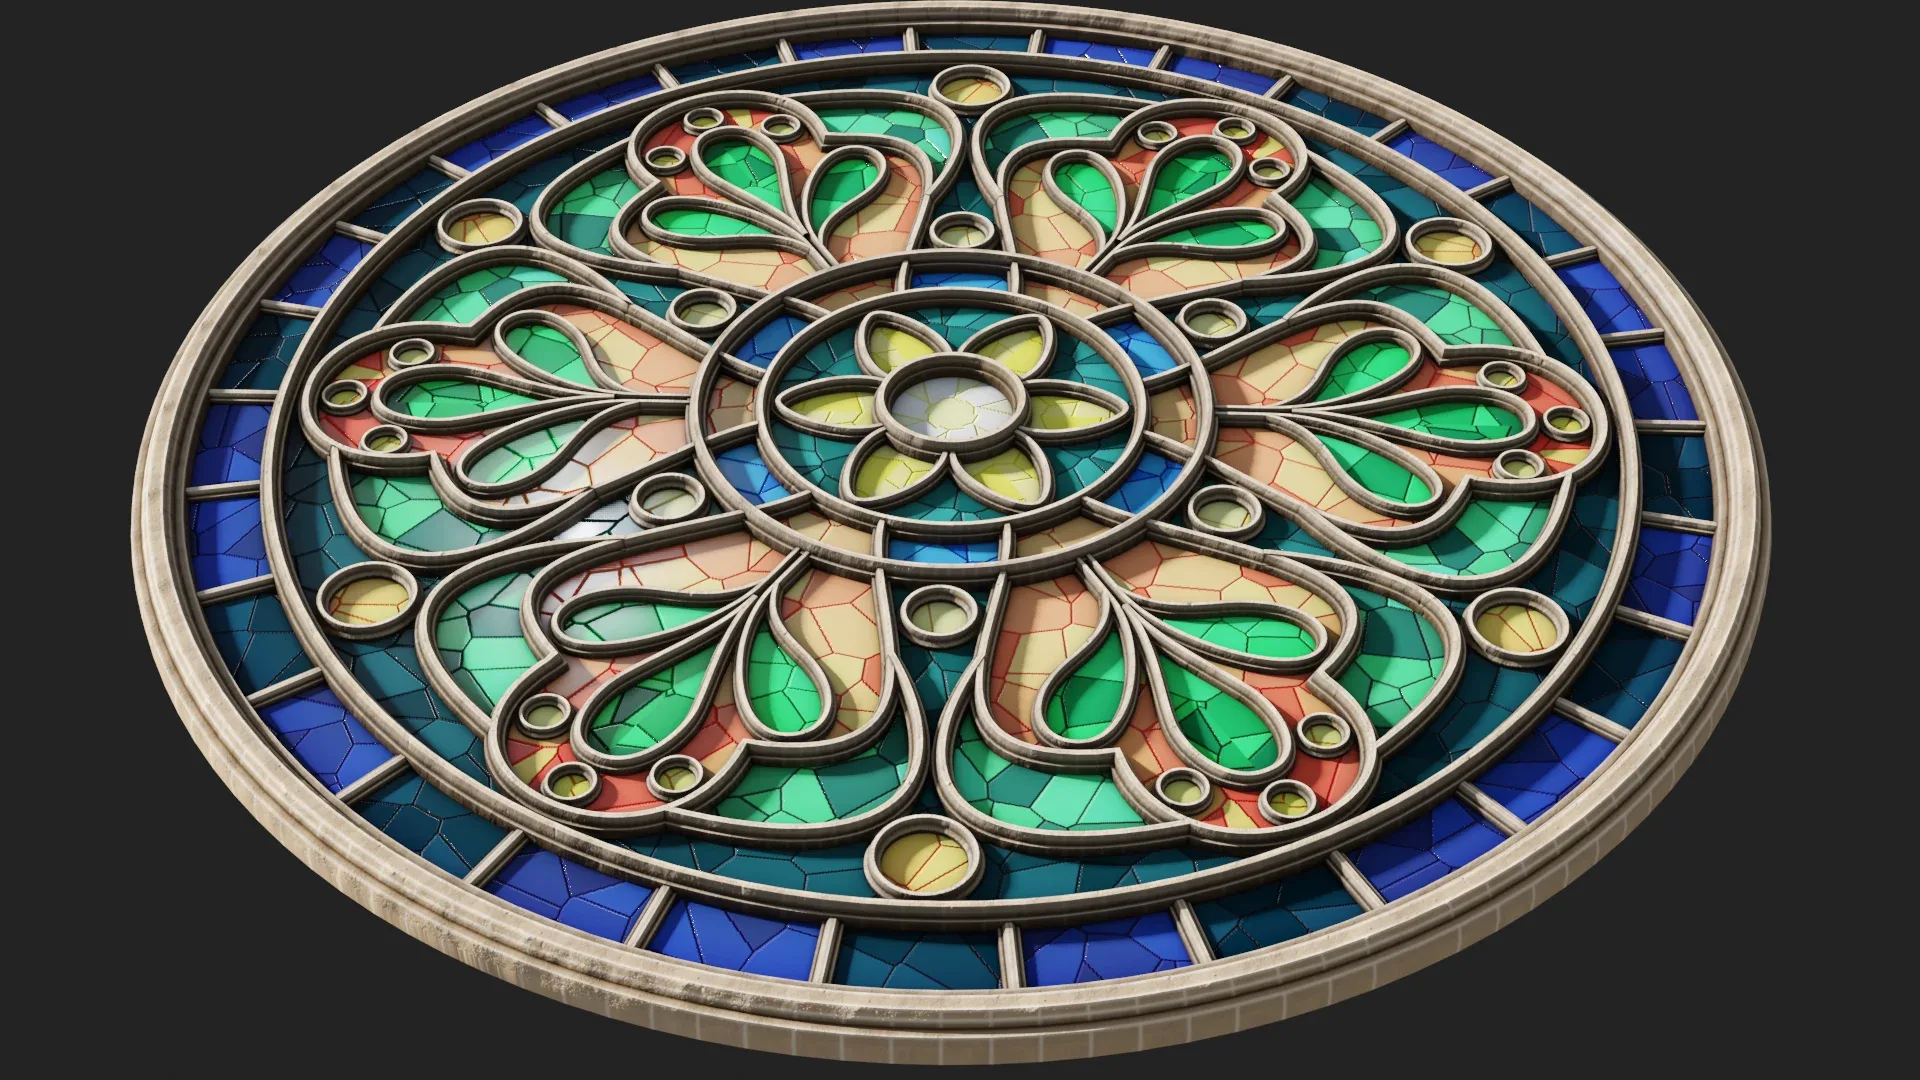 Round Gothic Rose Window 3D Model